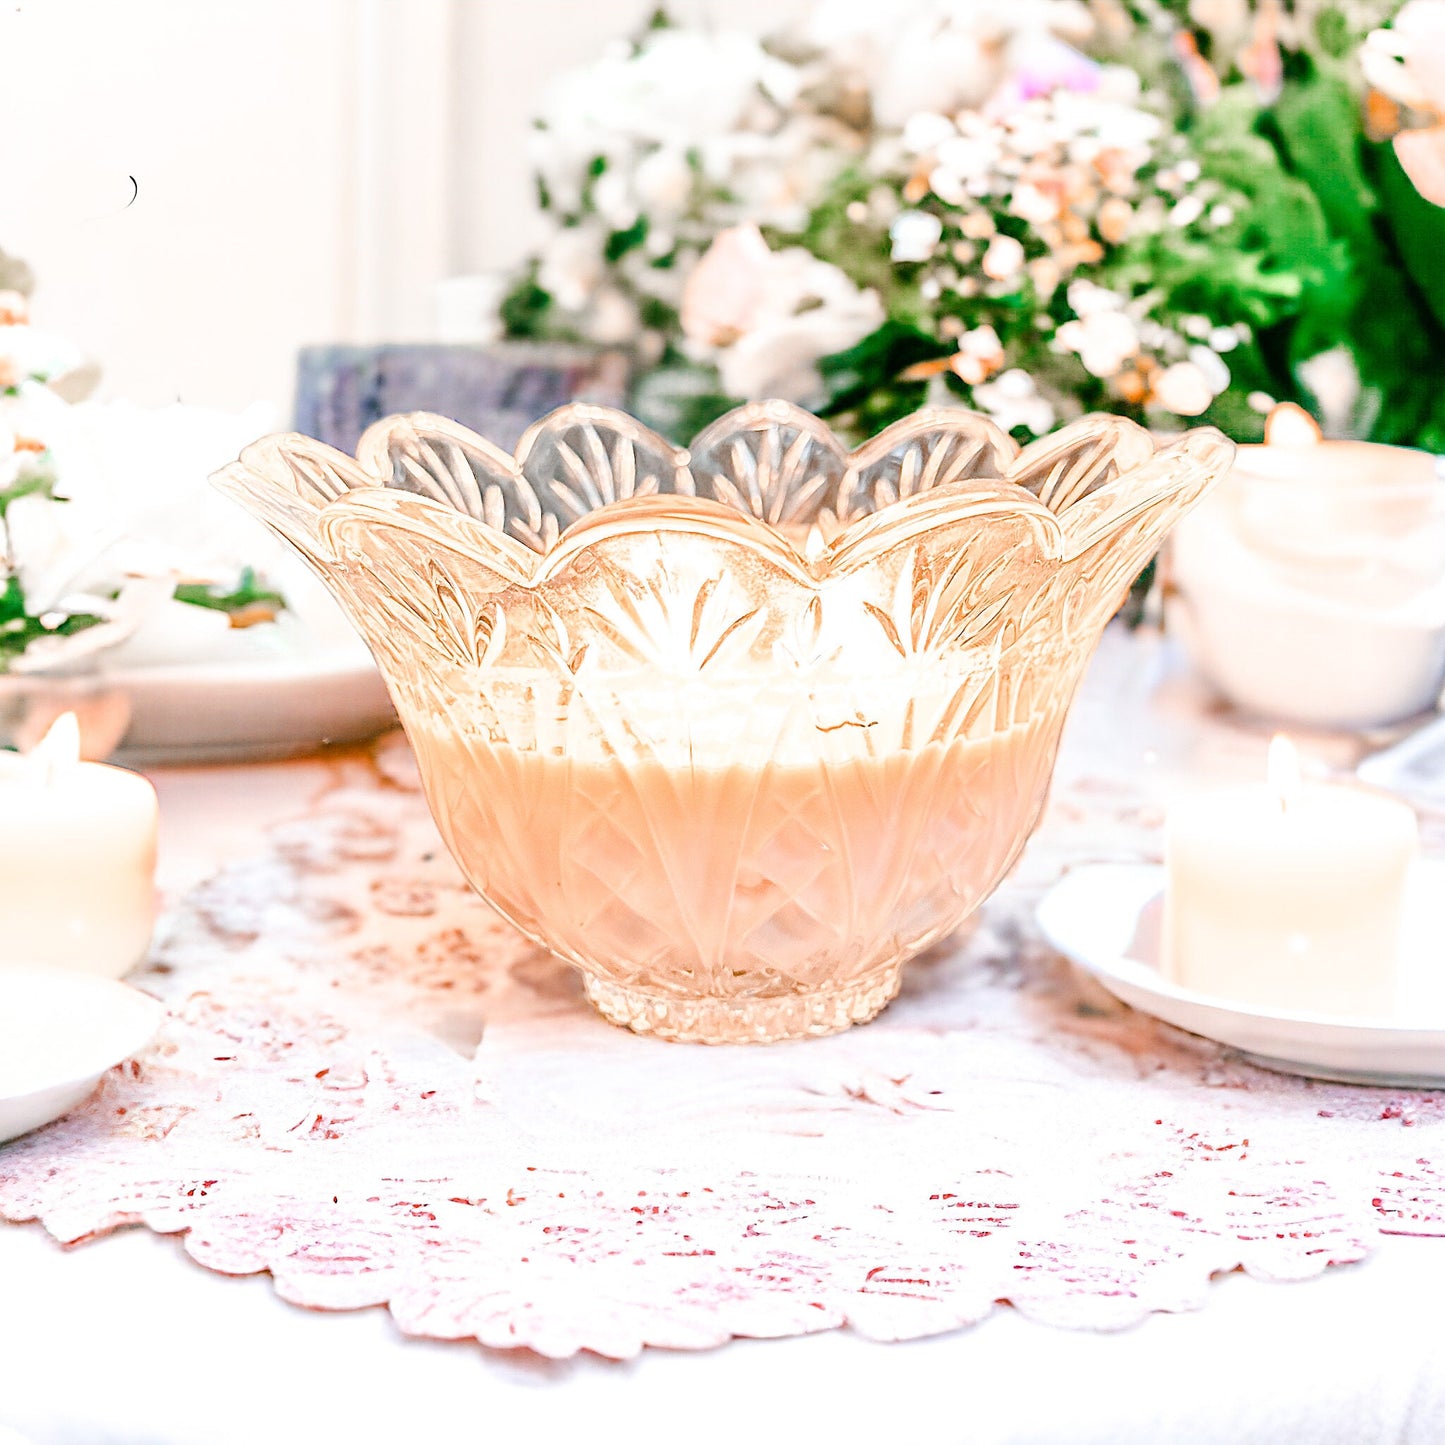 Gardenia Tuberose Candle in Vintage Crystal Bowl | Elegant Home Decor